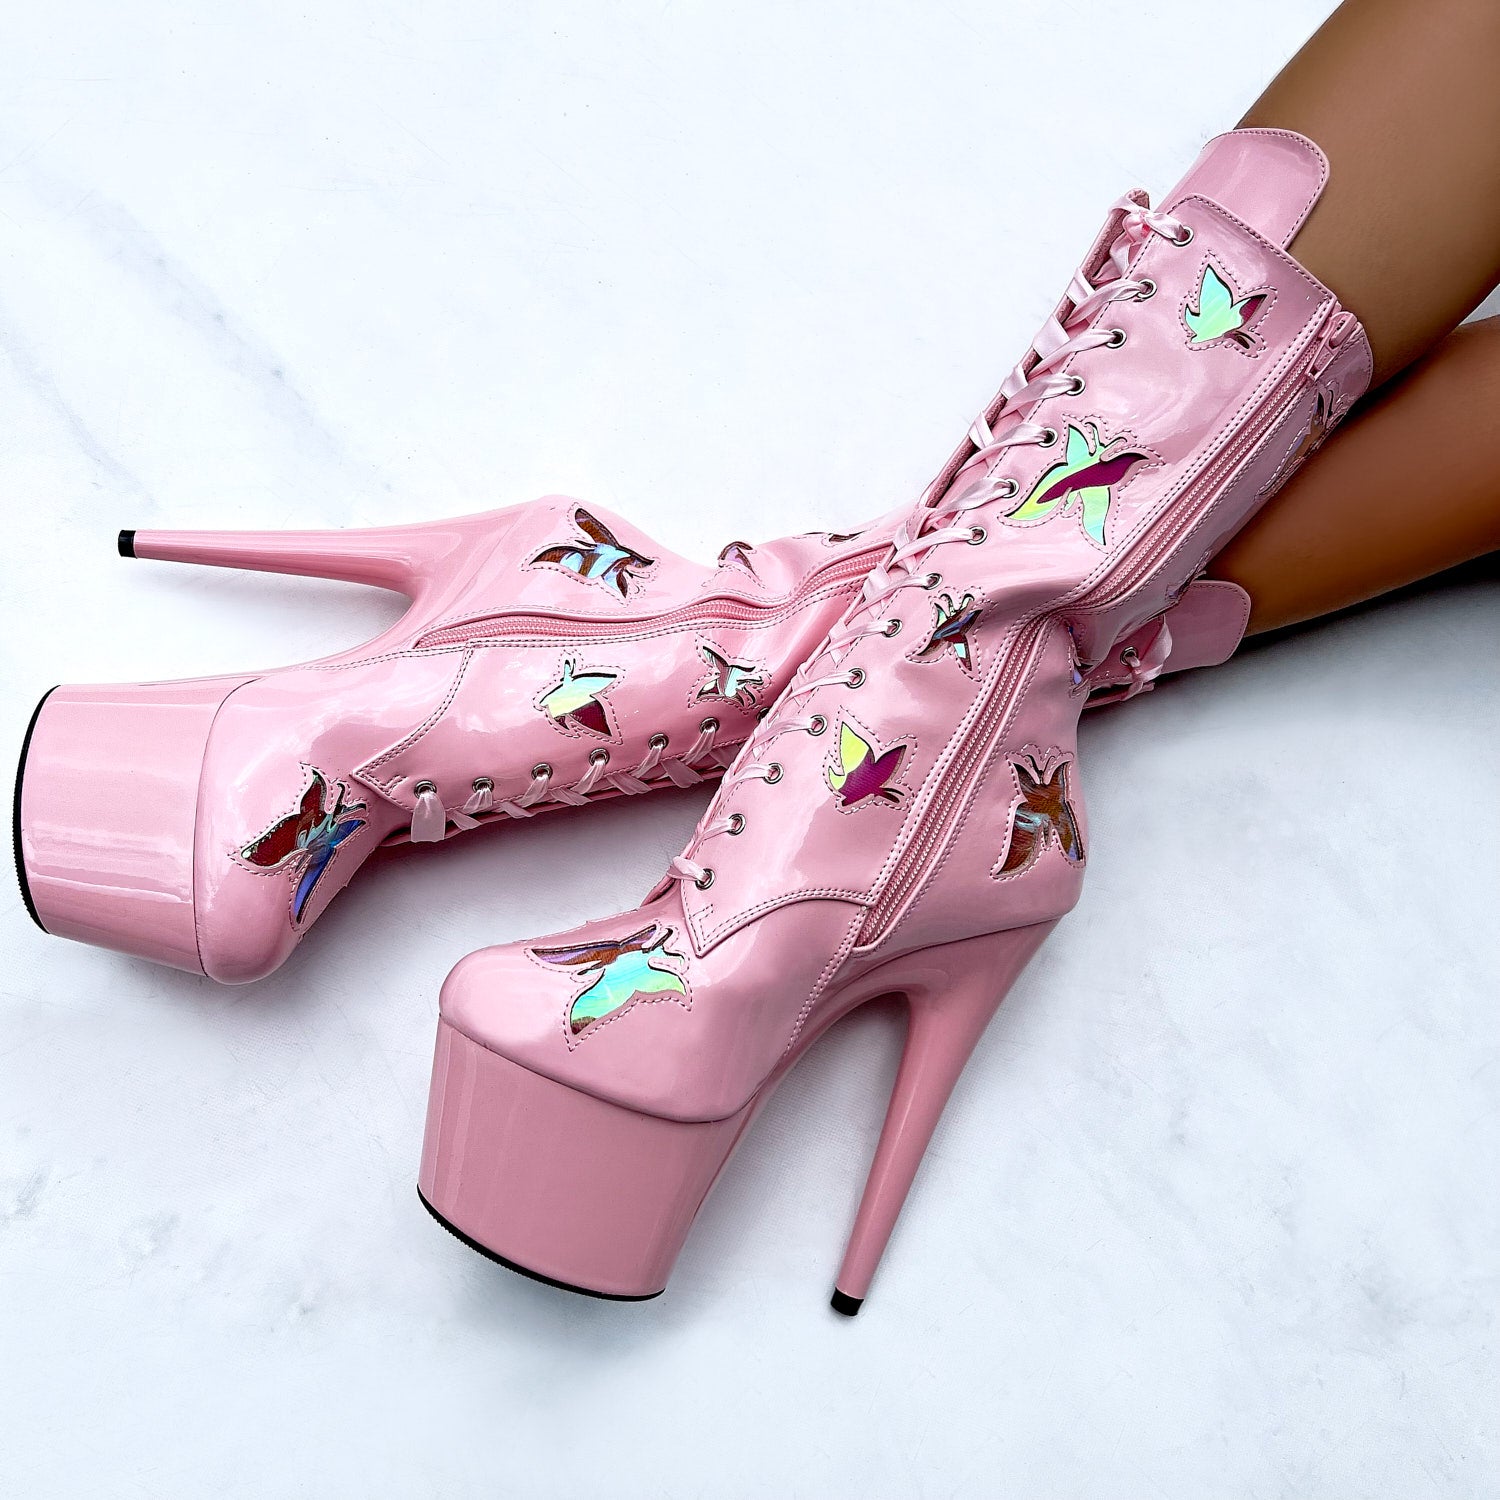 Butterfly Boot - Pink - 8 INCH, stripper shoe, stripper heel, pole heel, not a pleaser, platform, dancer, pole dance, floor work